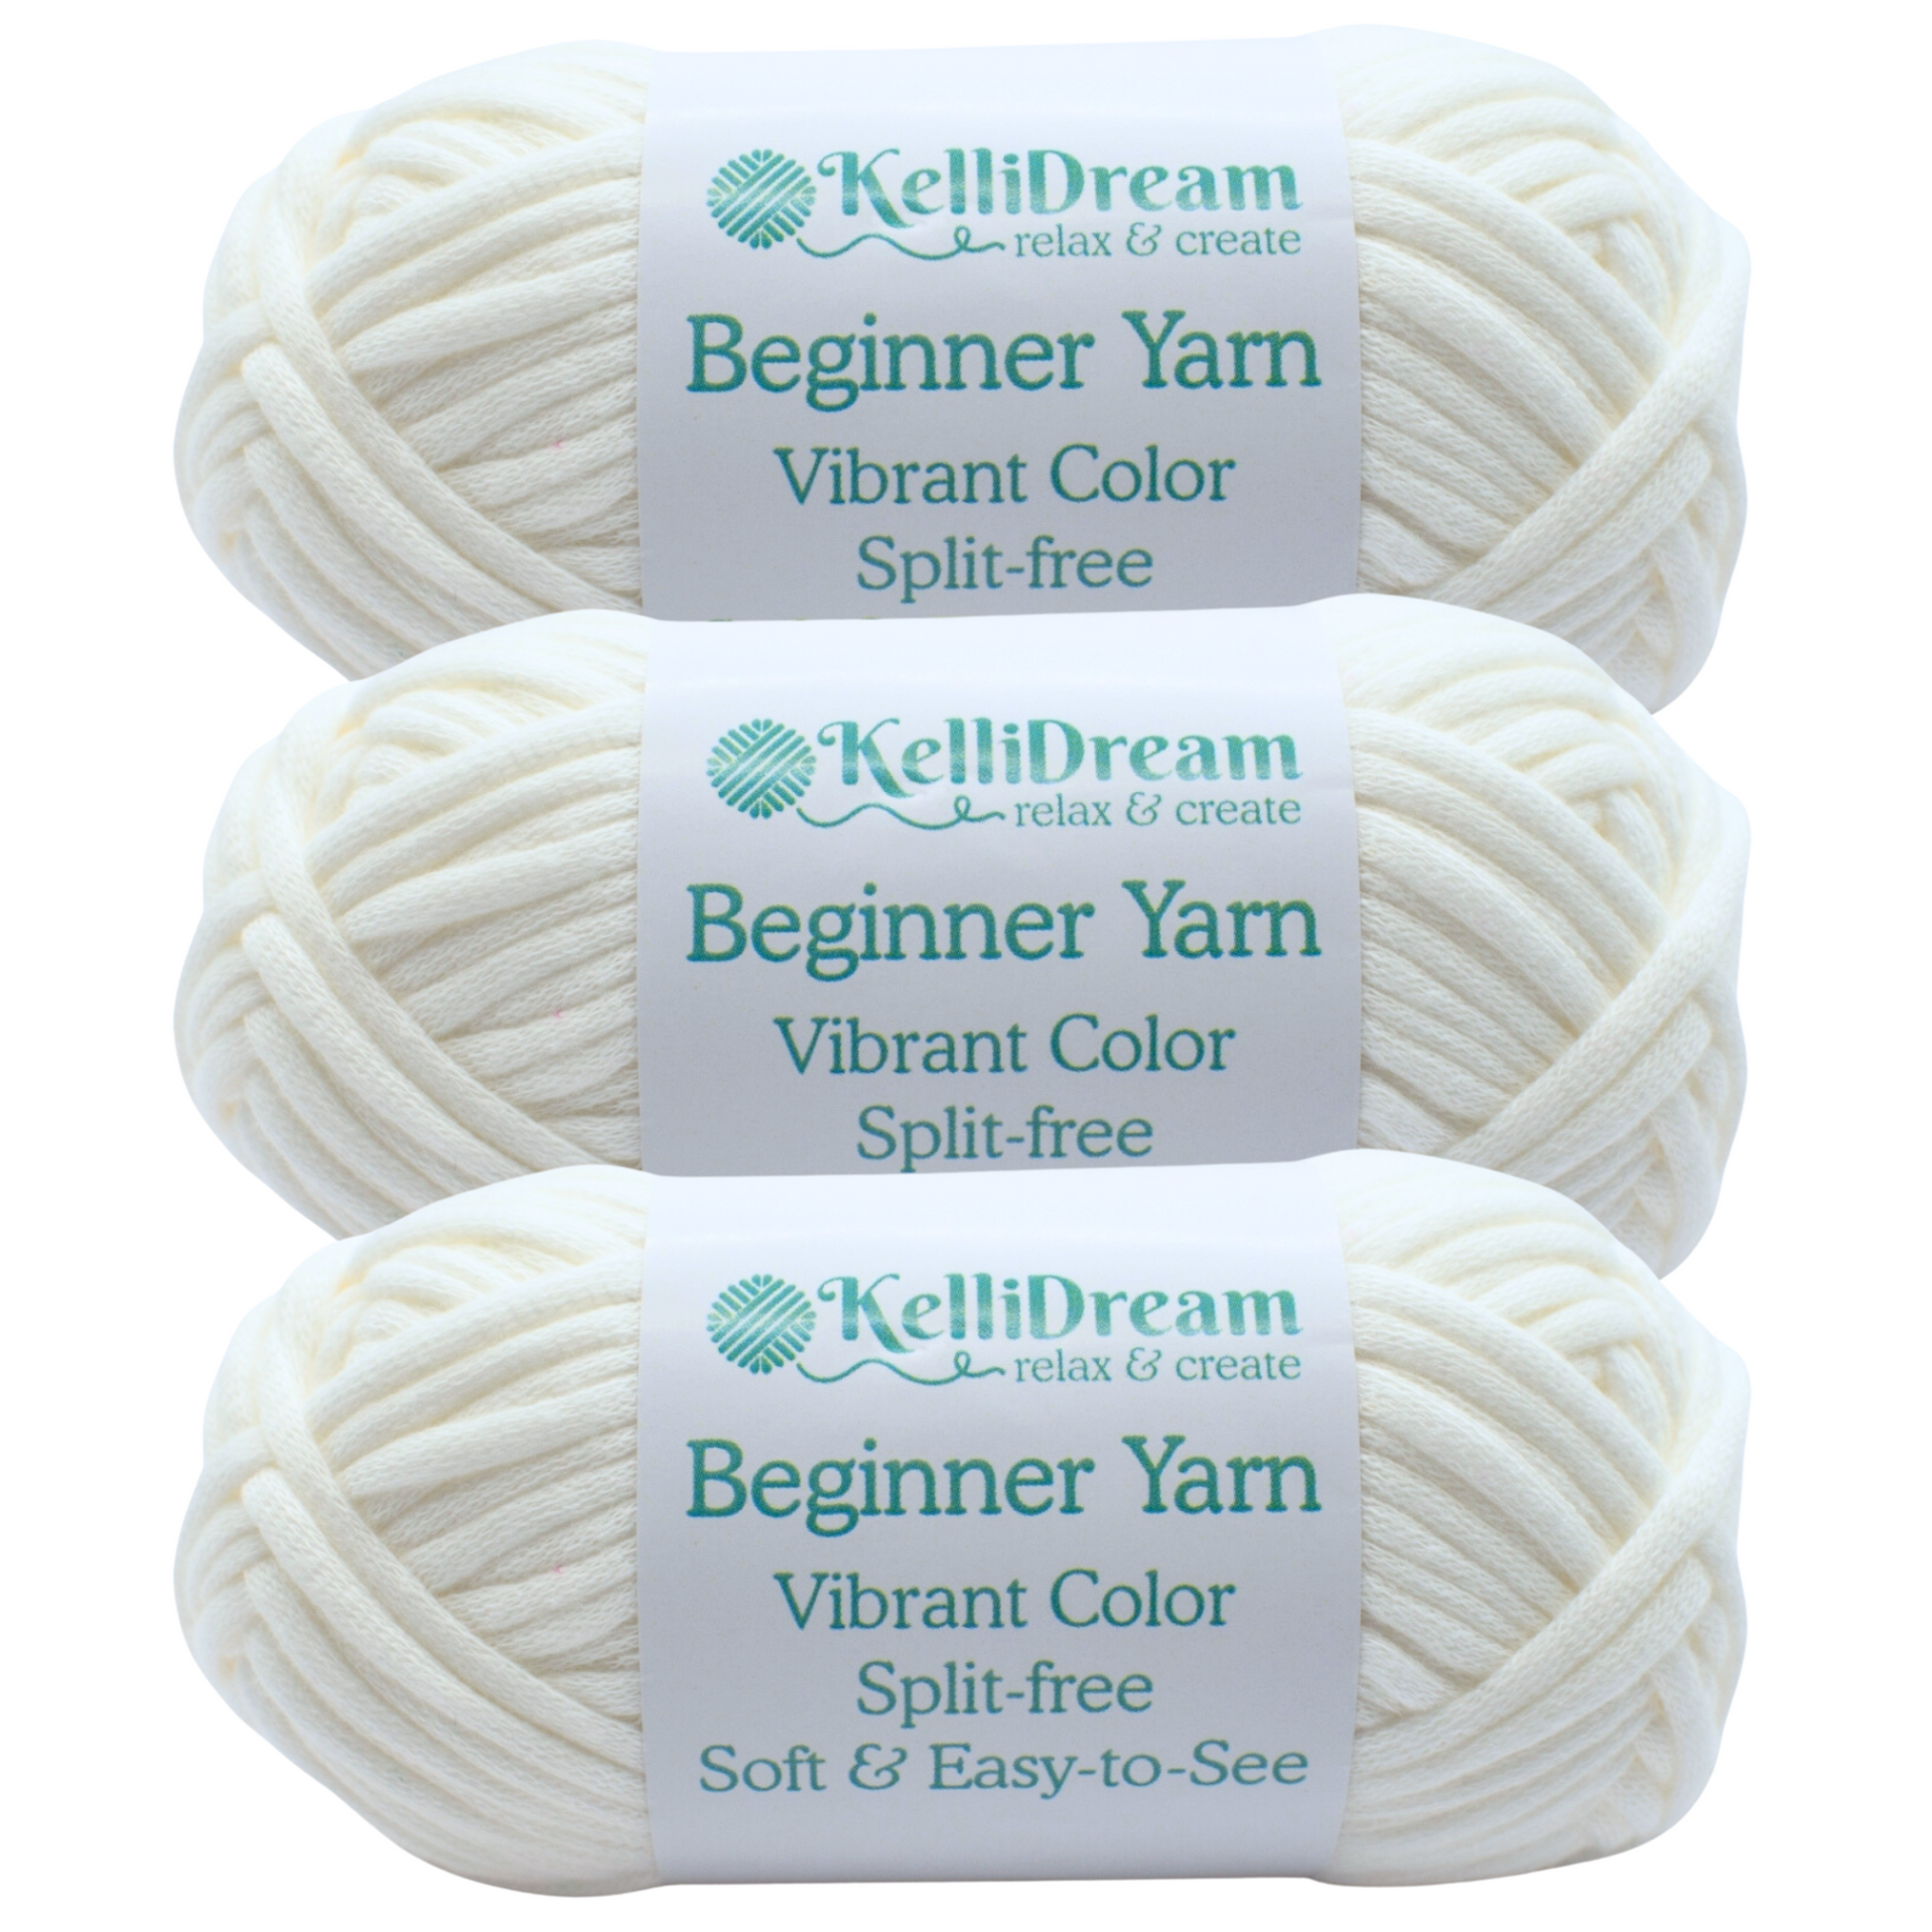  Beginners Crochet Yarn, 1 Pack 250g/881oz Crochet Yarn, 328  Yards Bright Green Yarn For Crocheting Knitting